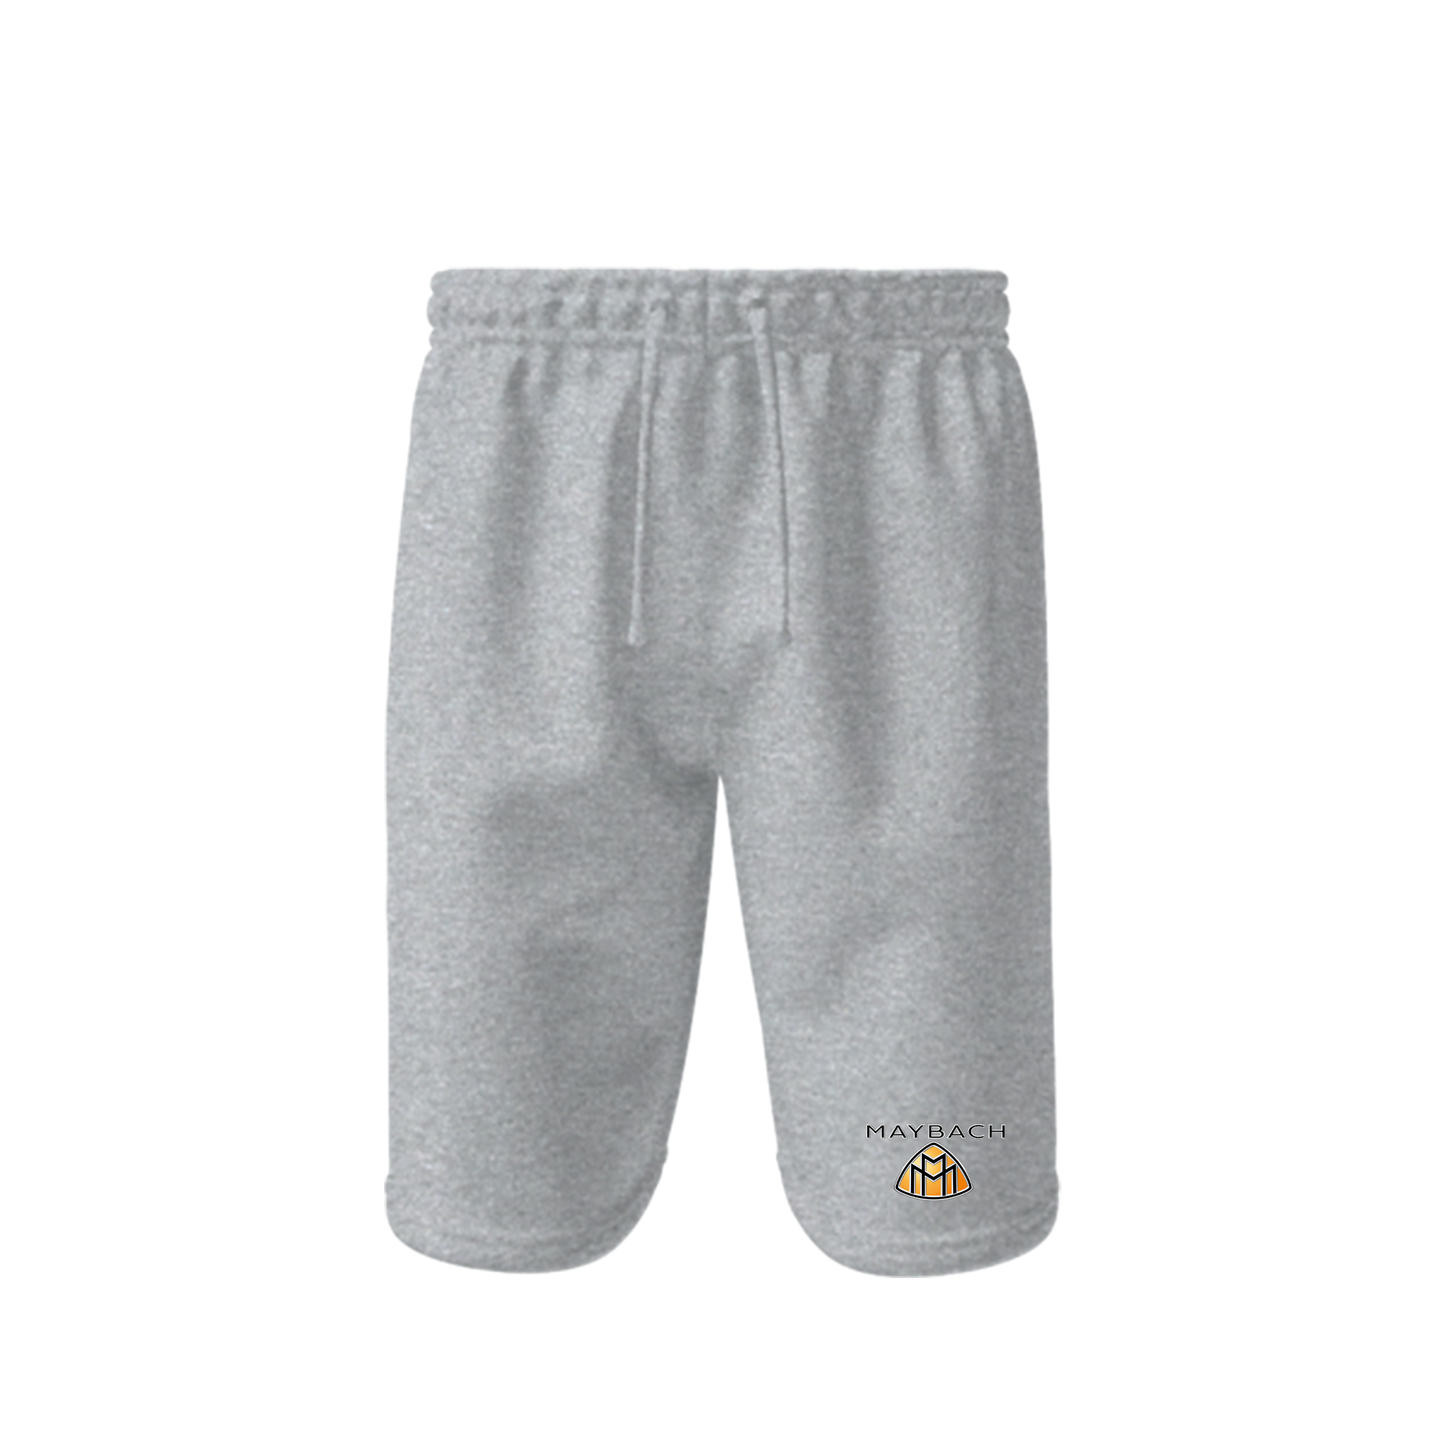 Men’s Maybach Car Athletic Fleece Shorts